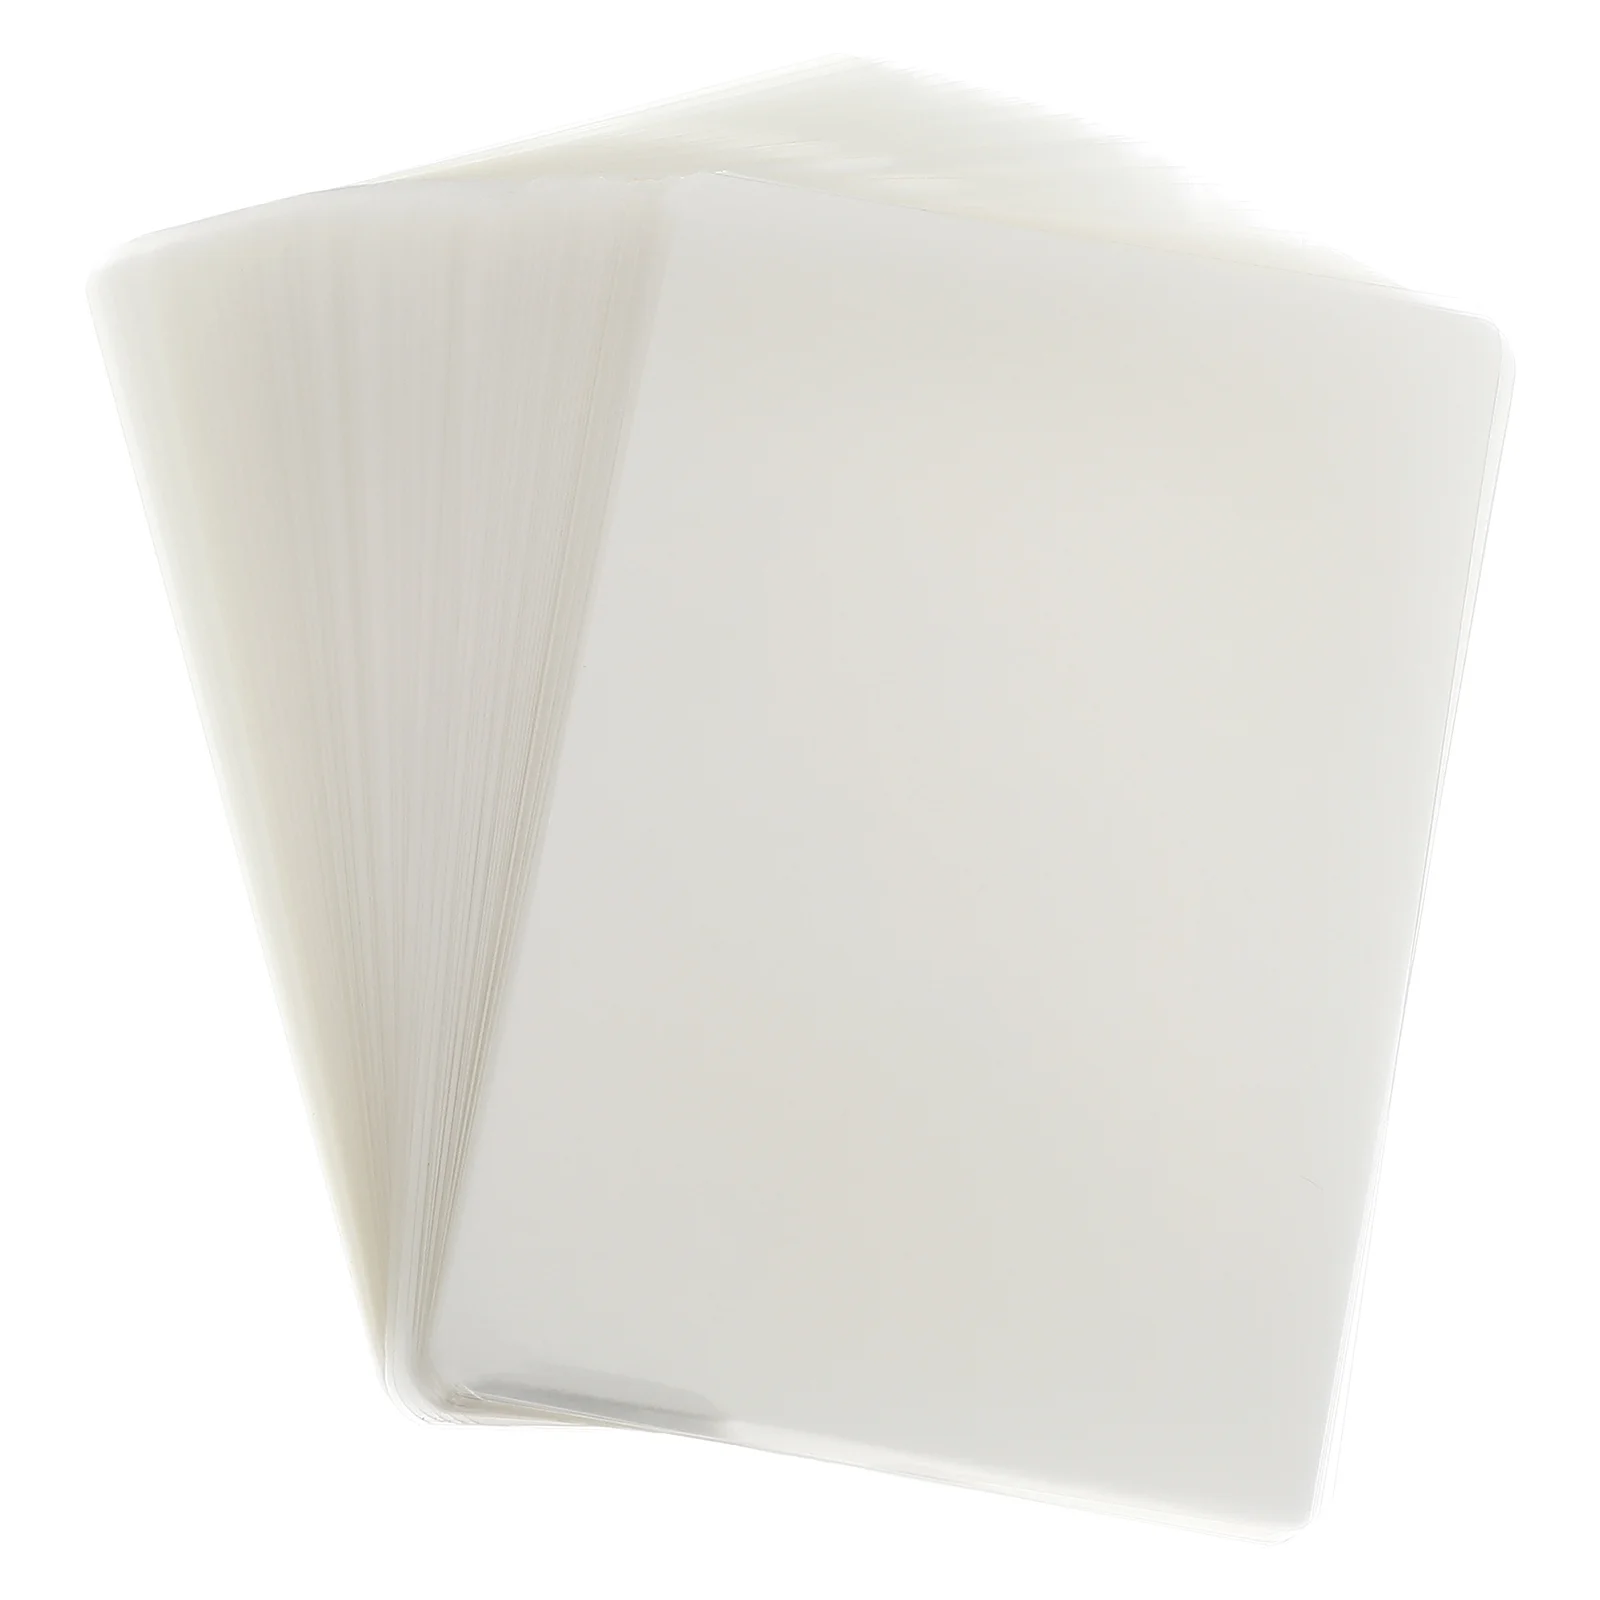 

200 Pcs Laminator Pouches Plastic Sheets Lamination Gift Wrap Paper Laminating Film Clear Wrapping Laminate